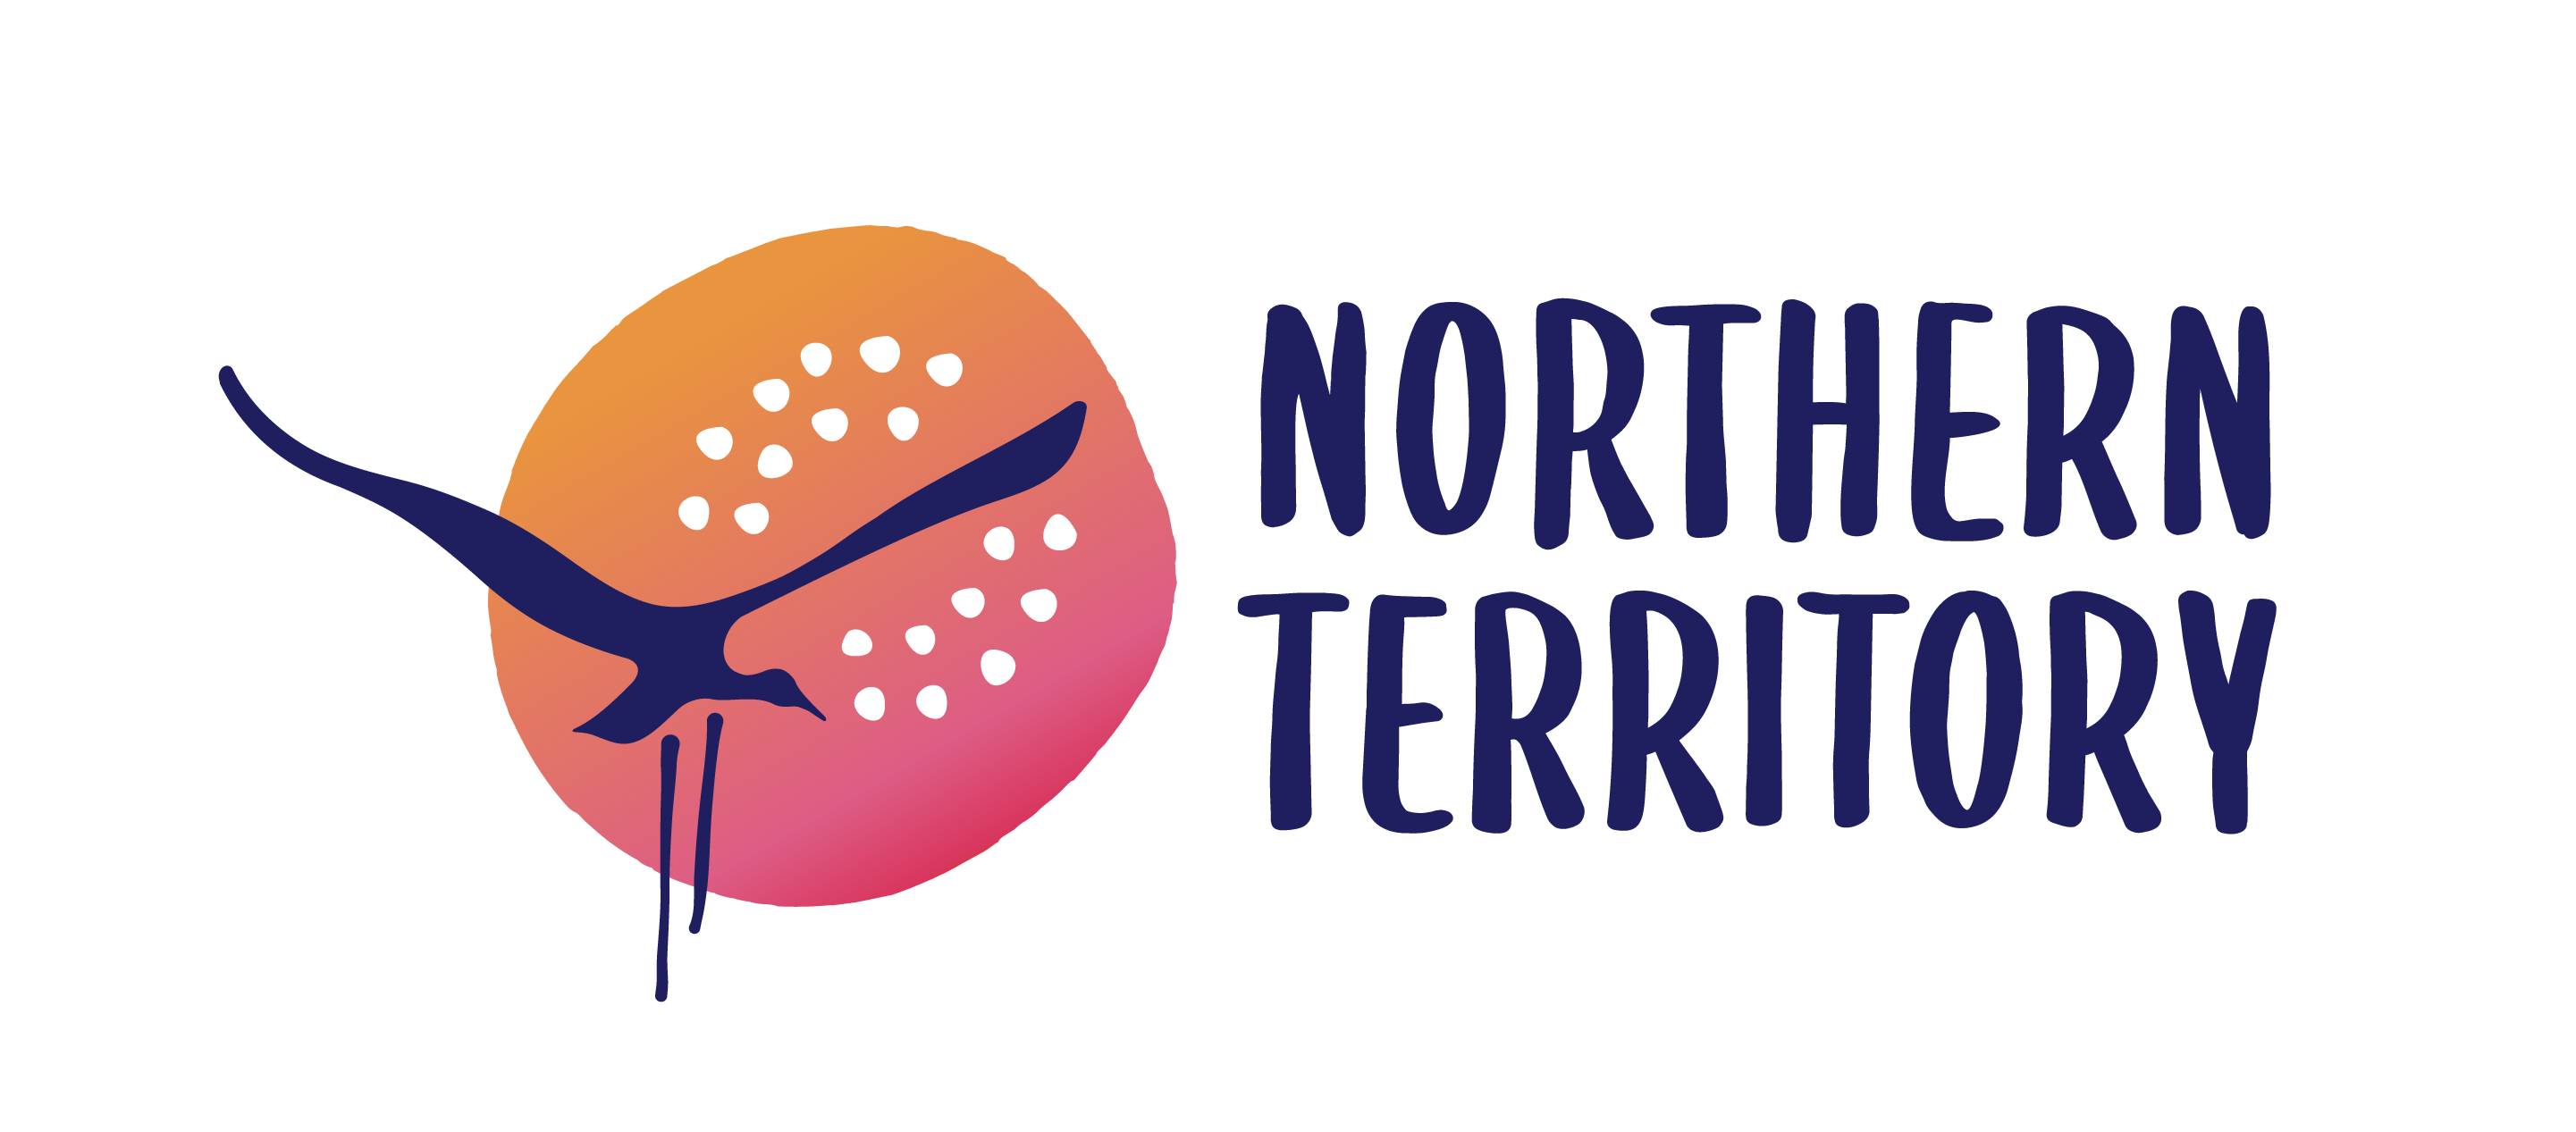 Northern Territory badge